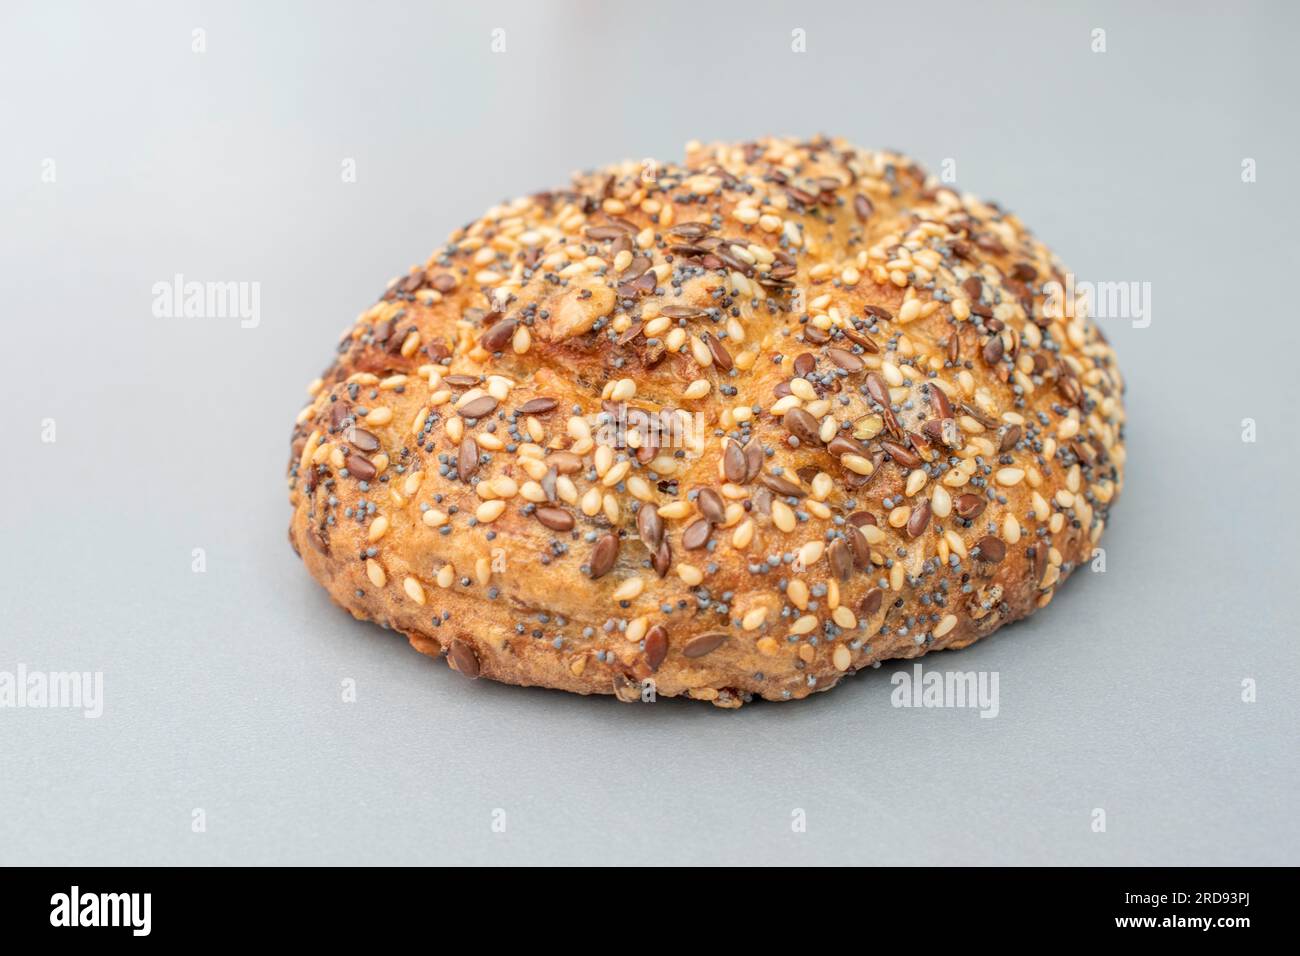 Rotoli di proteine: Il pane è ideale per una dieta vegana variegata grazie alle sue fonti proteiche puramente vegetali. Piselli ricchi, semi freschi e farina di semi di zucca Foto Stock